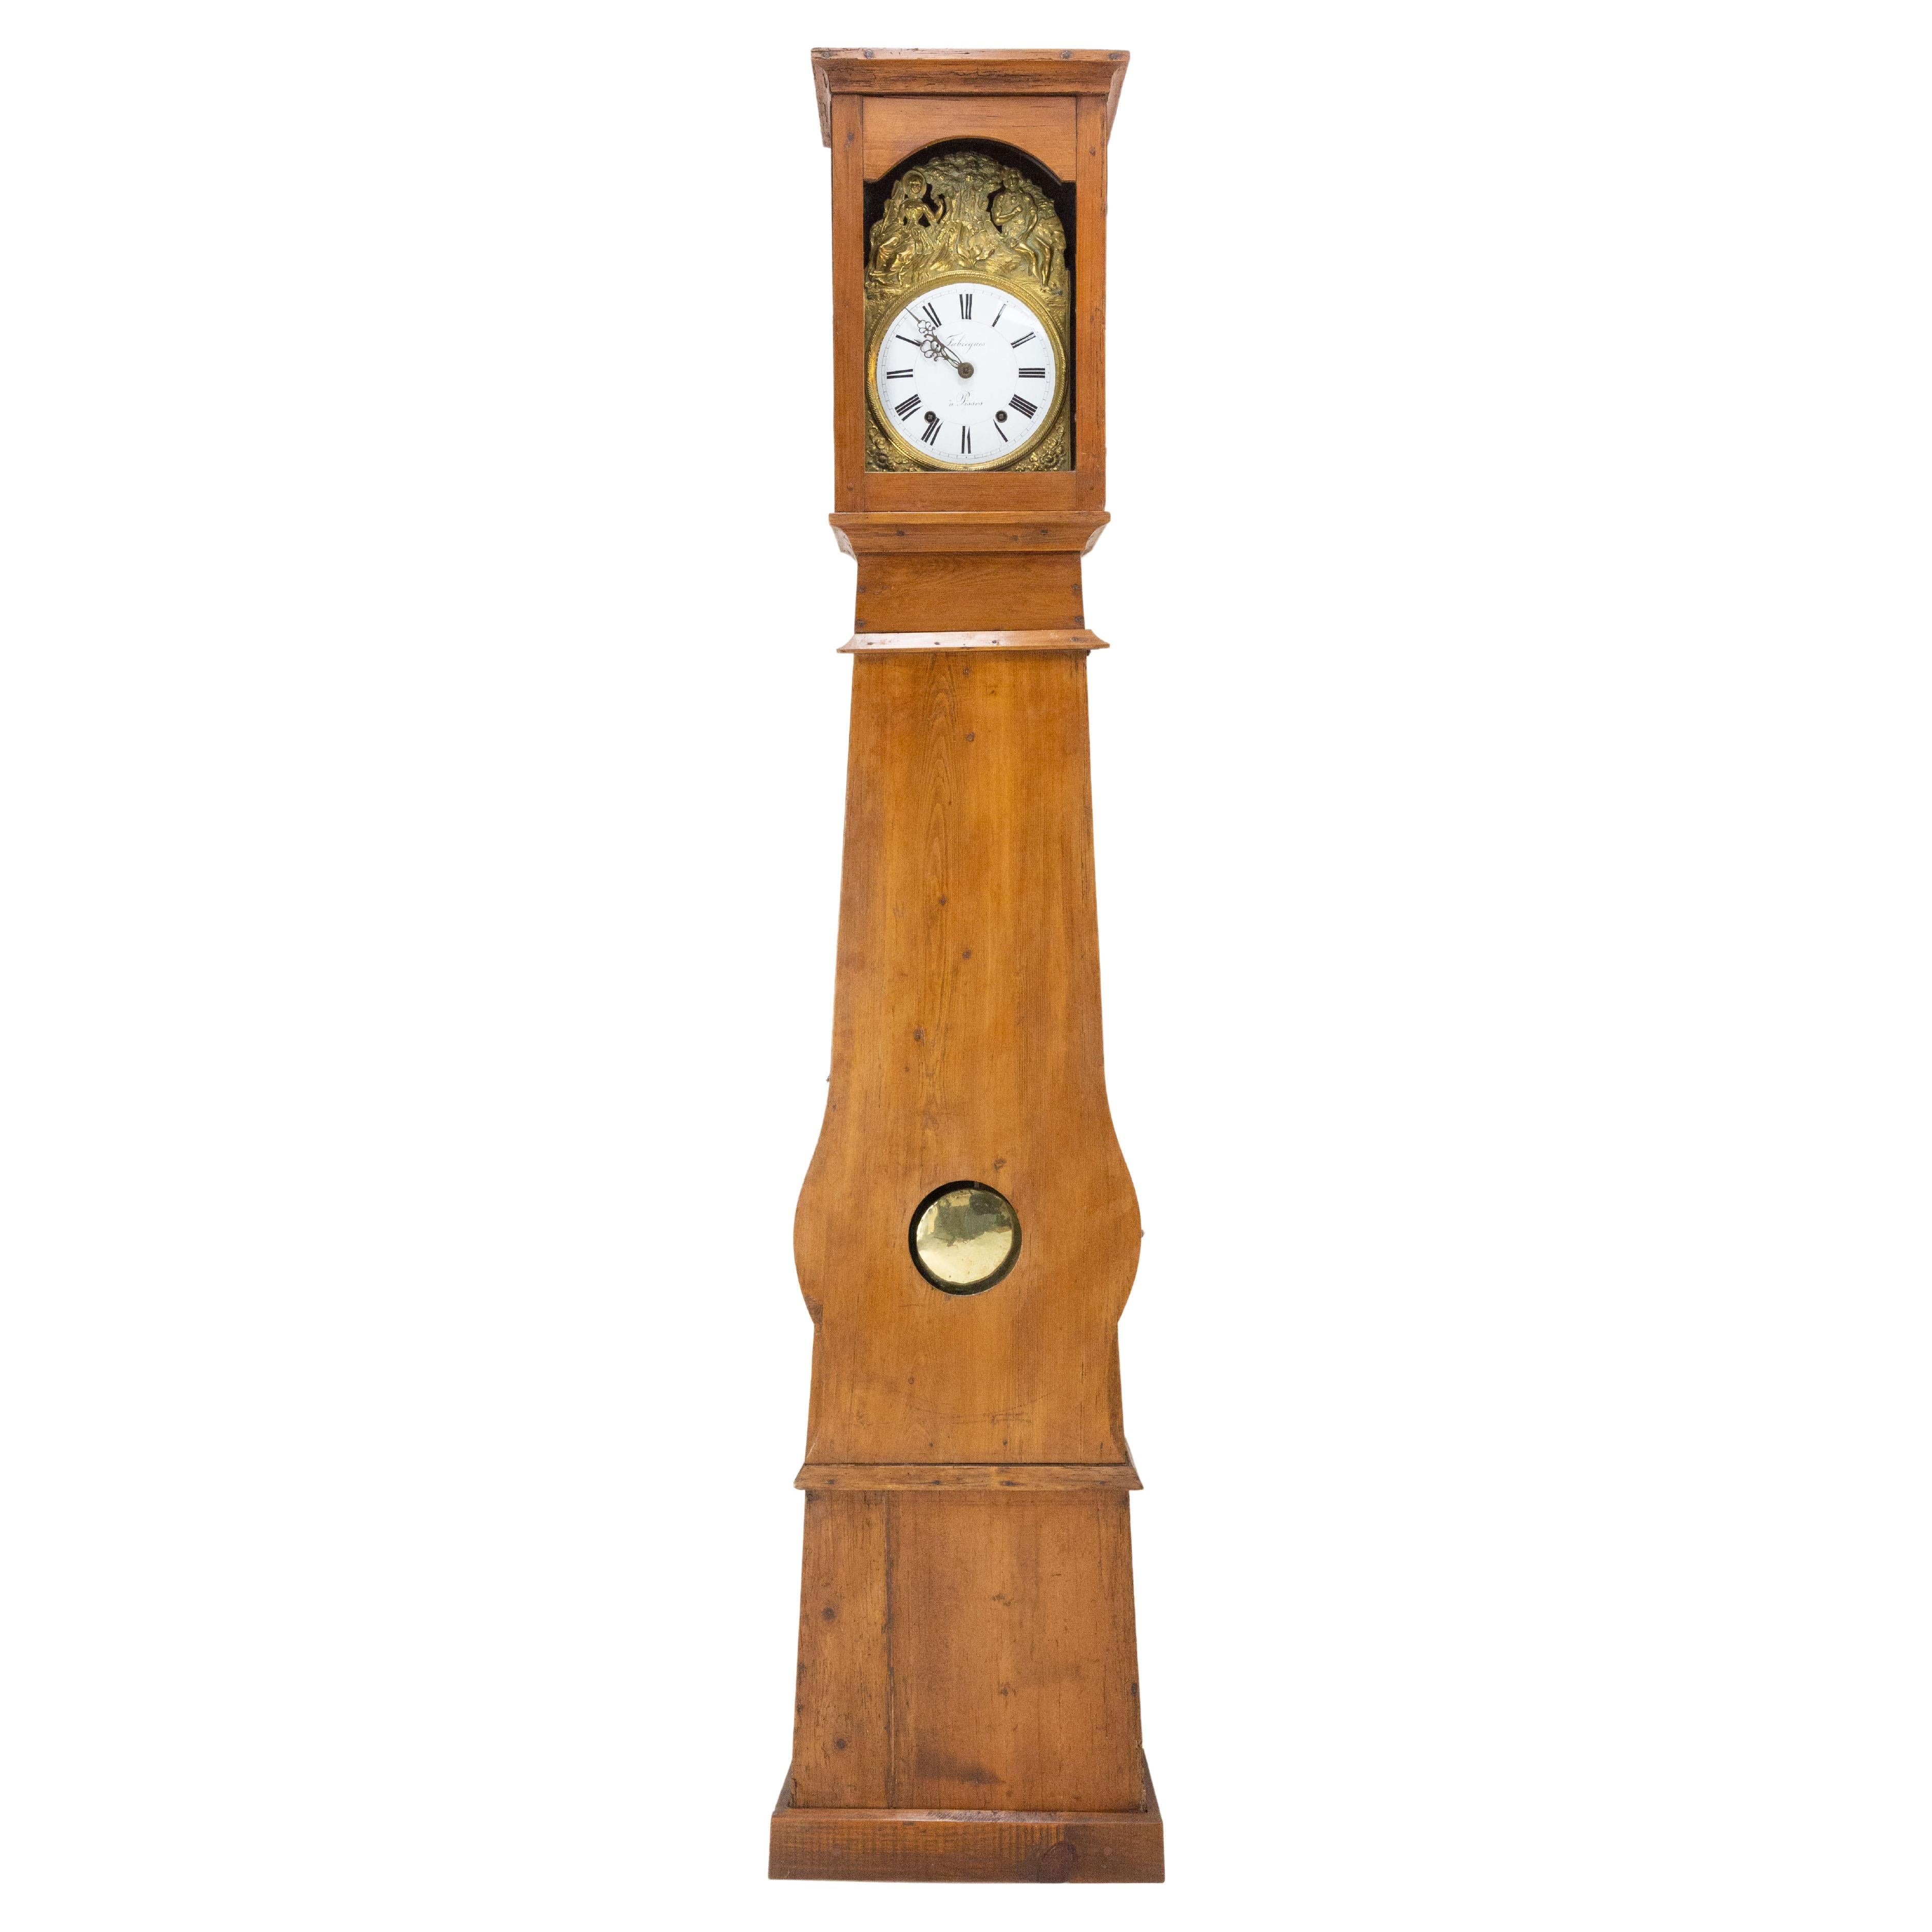 19th Century French Empire Comtoise or Grandfather Clock with Romantic Scene